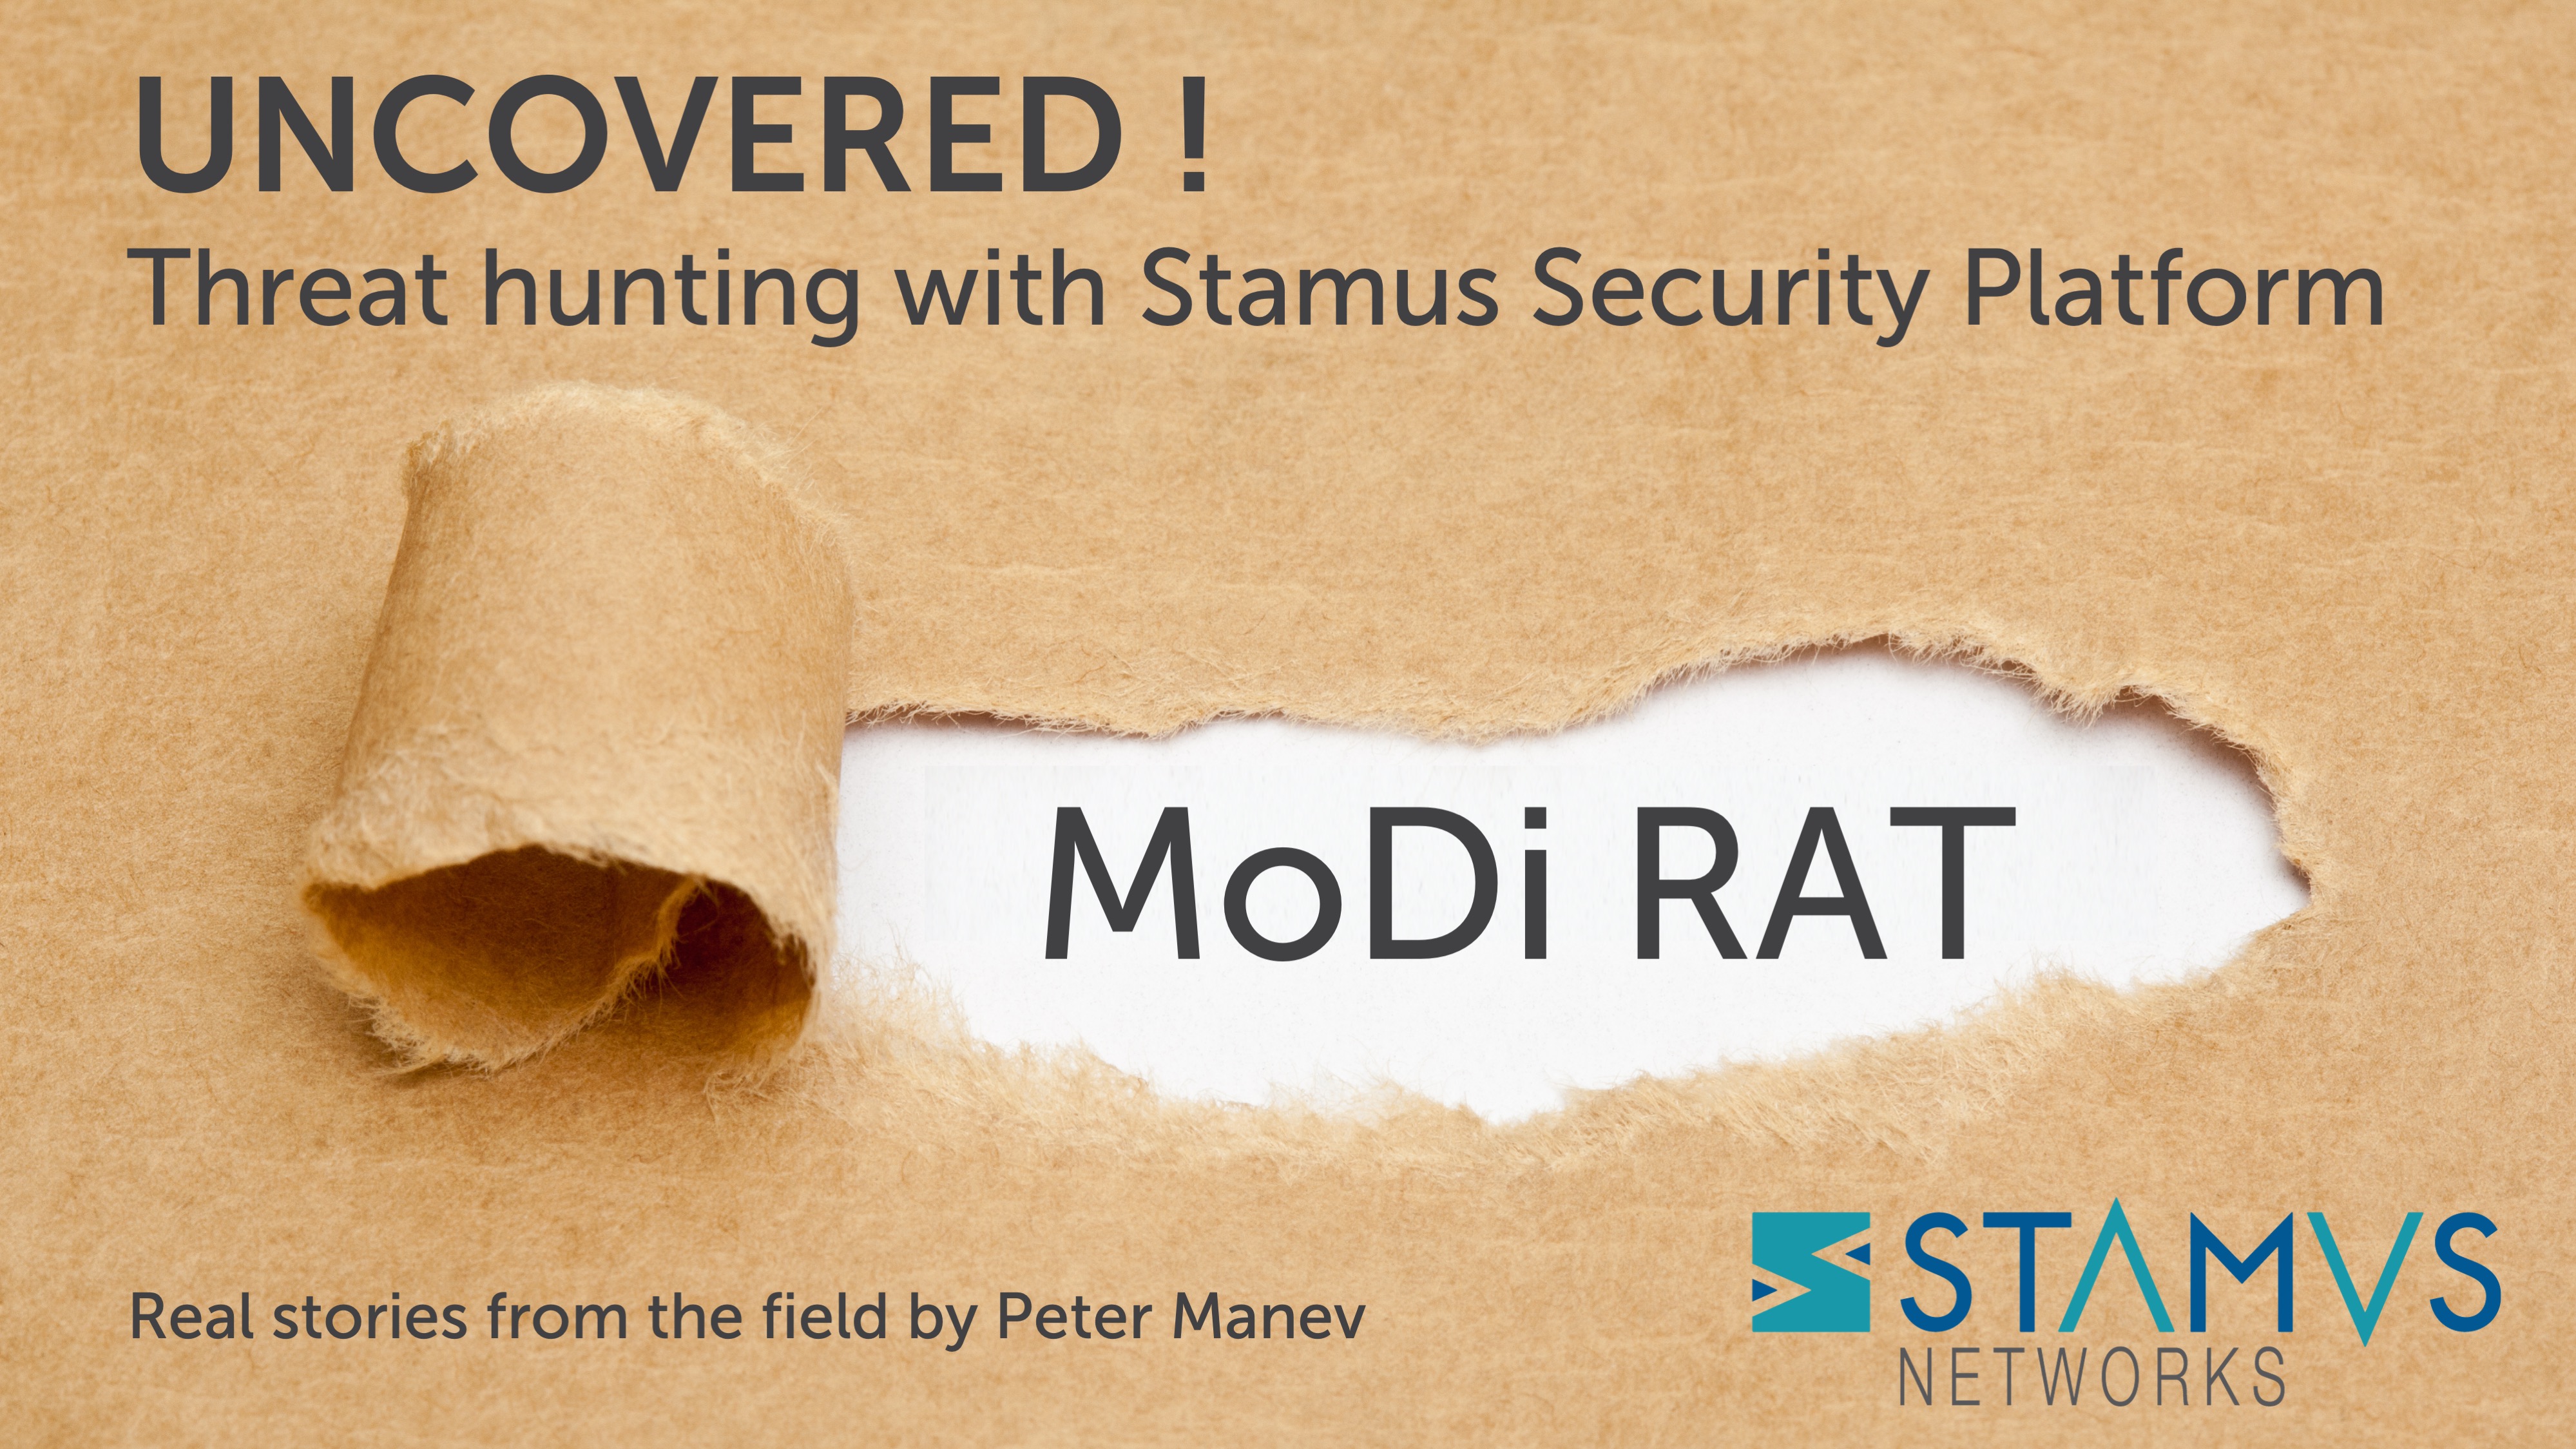 Threat Hunting with Stamus Security Platform: MoDi RAT